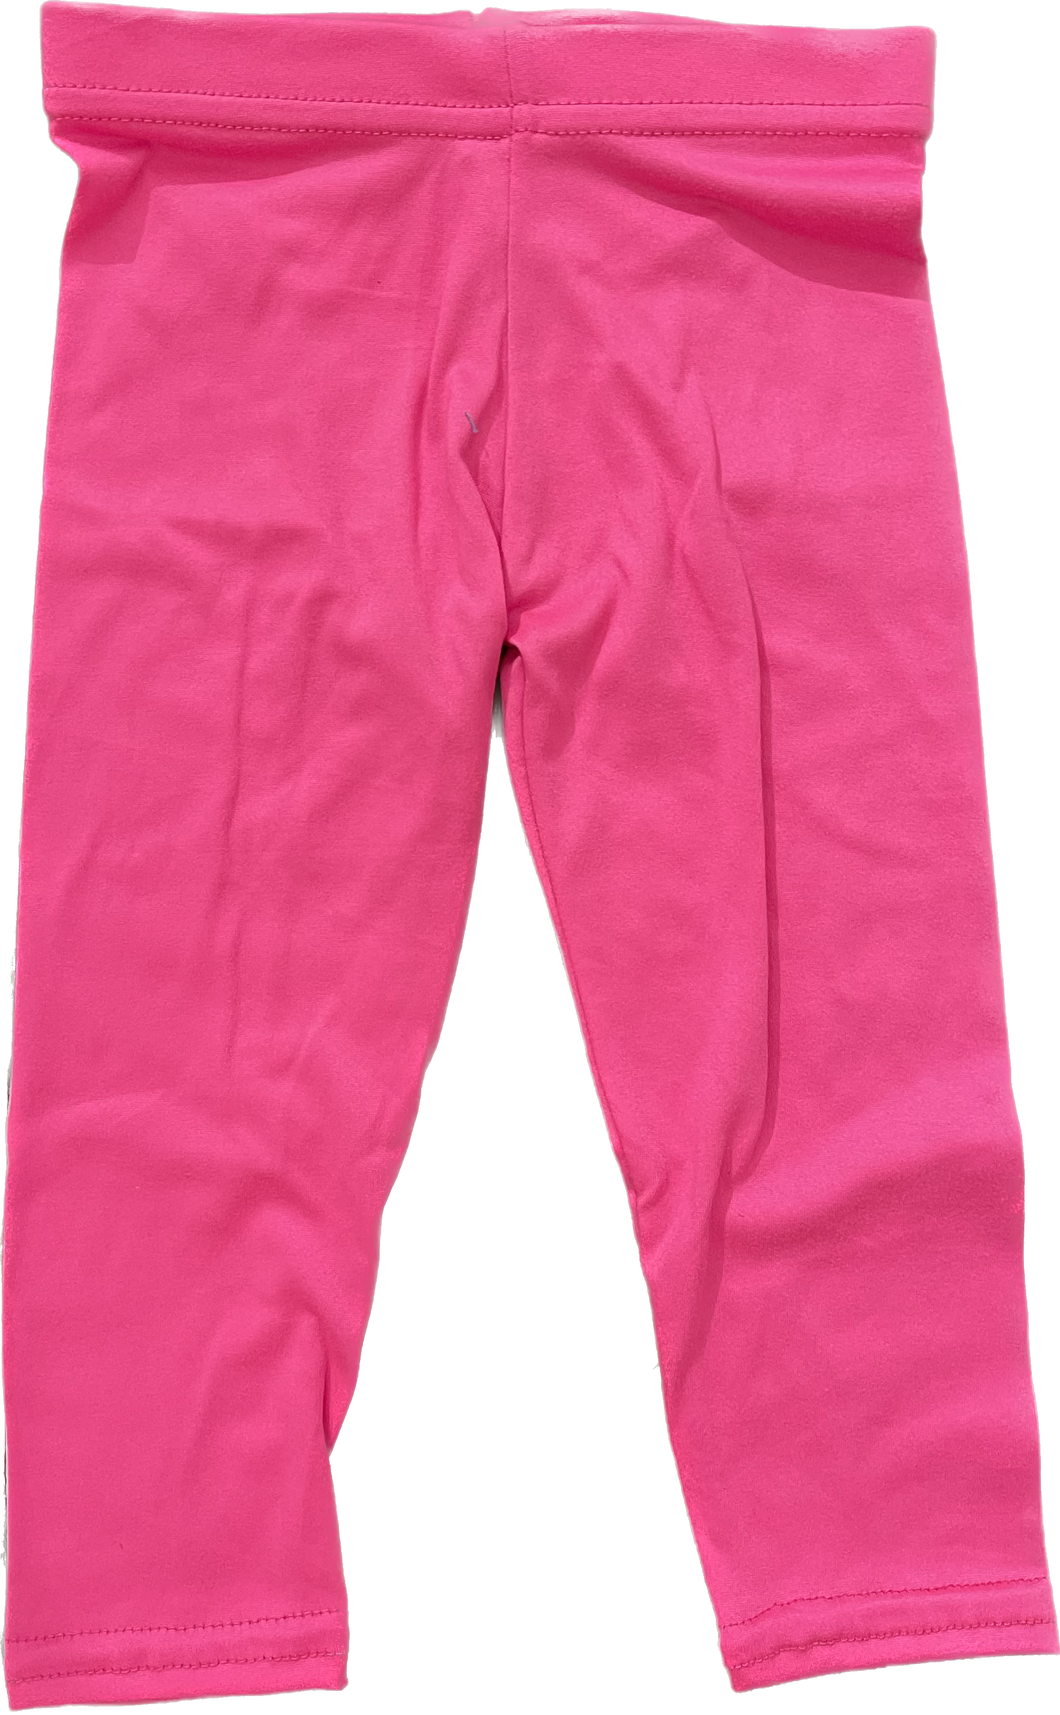 Dori Hot Pink Full Length